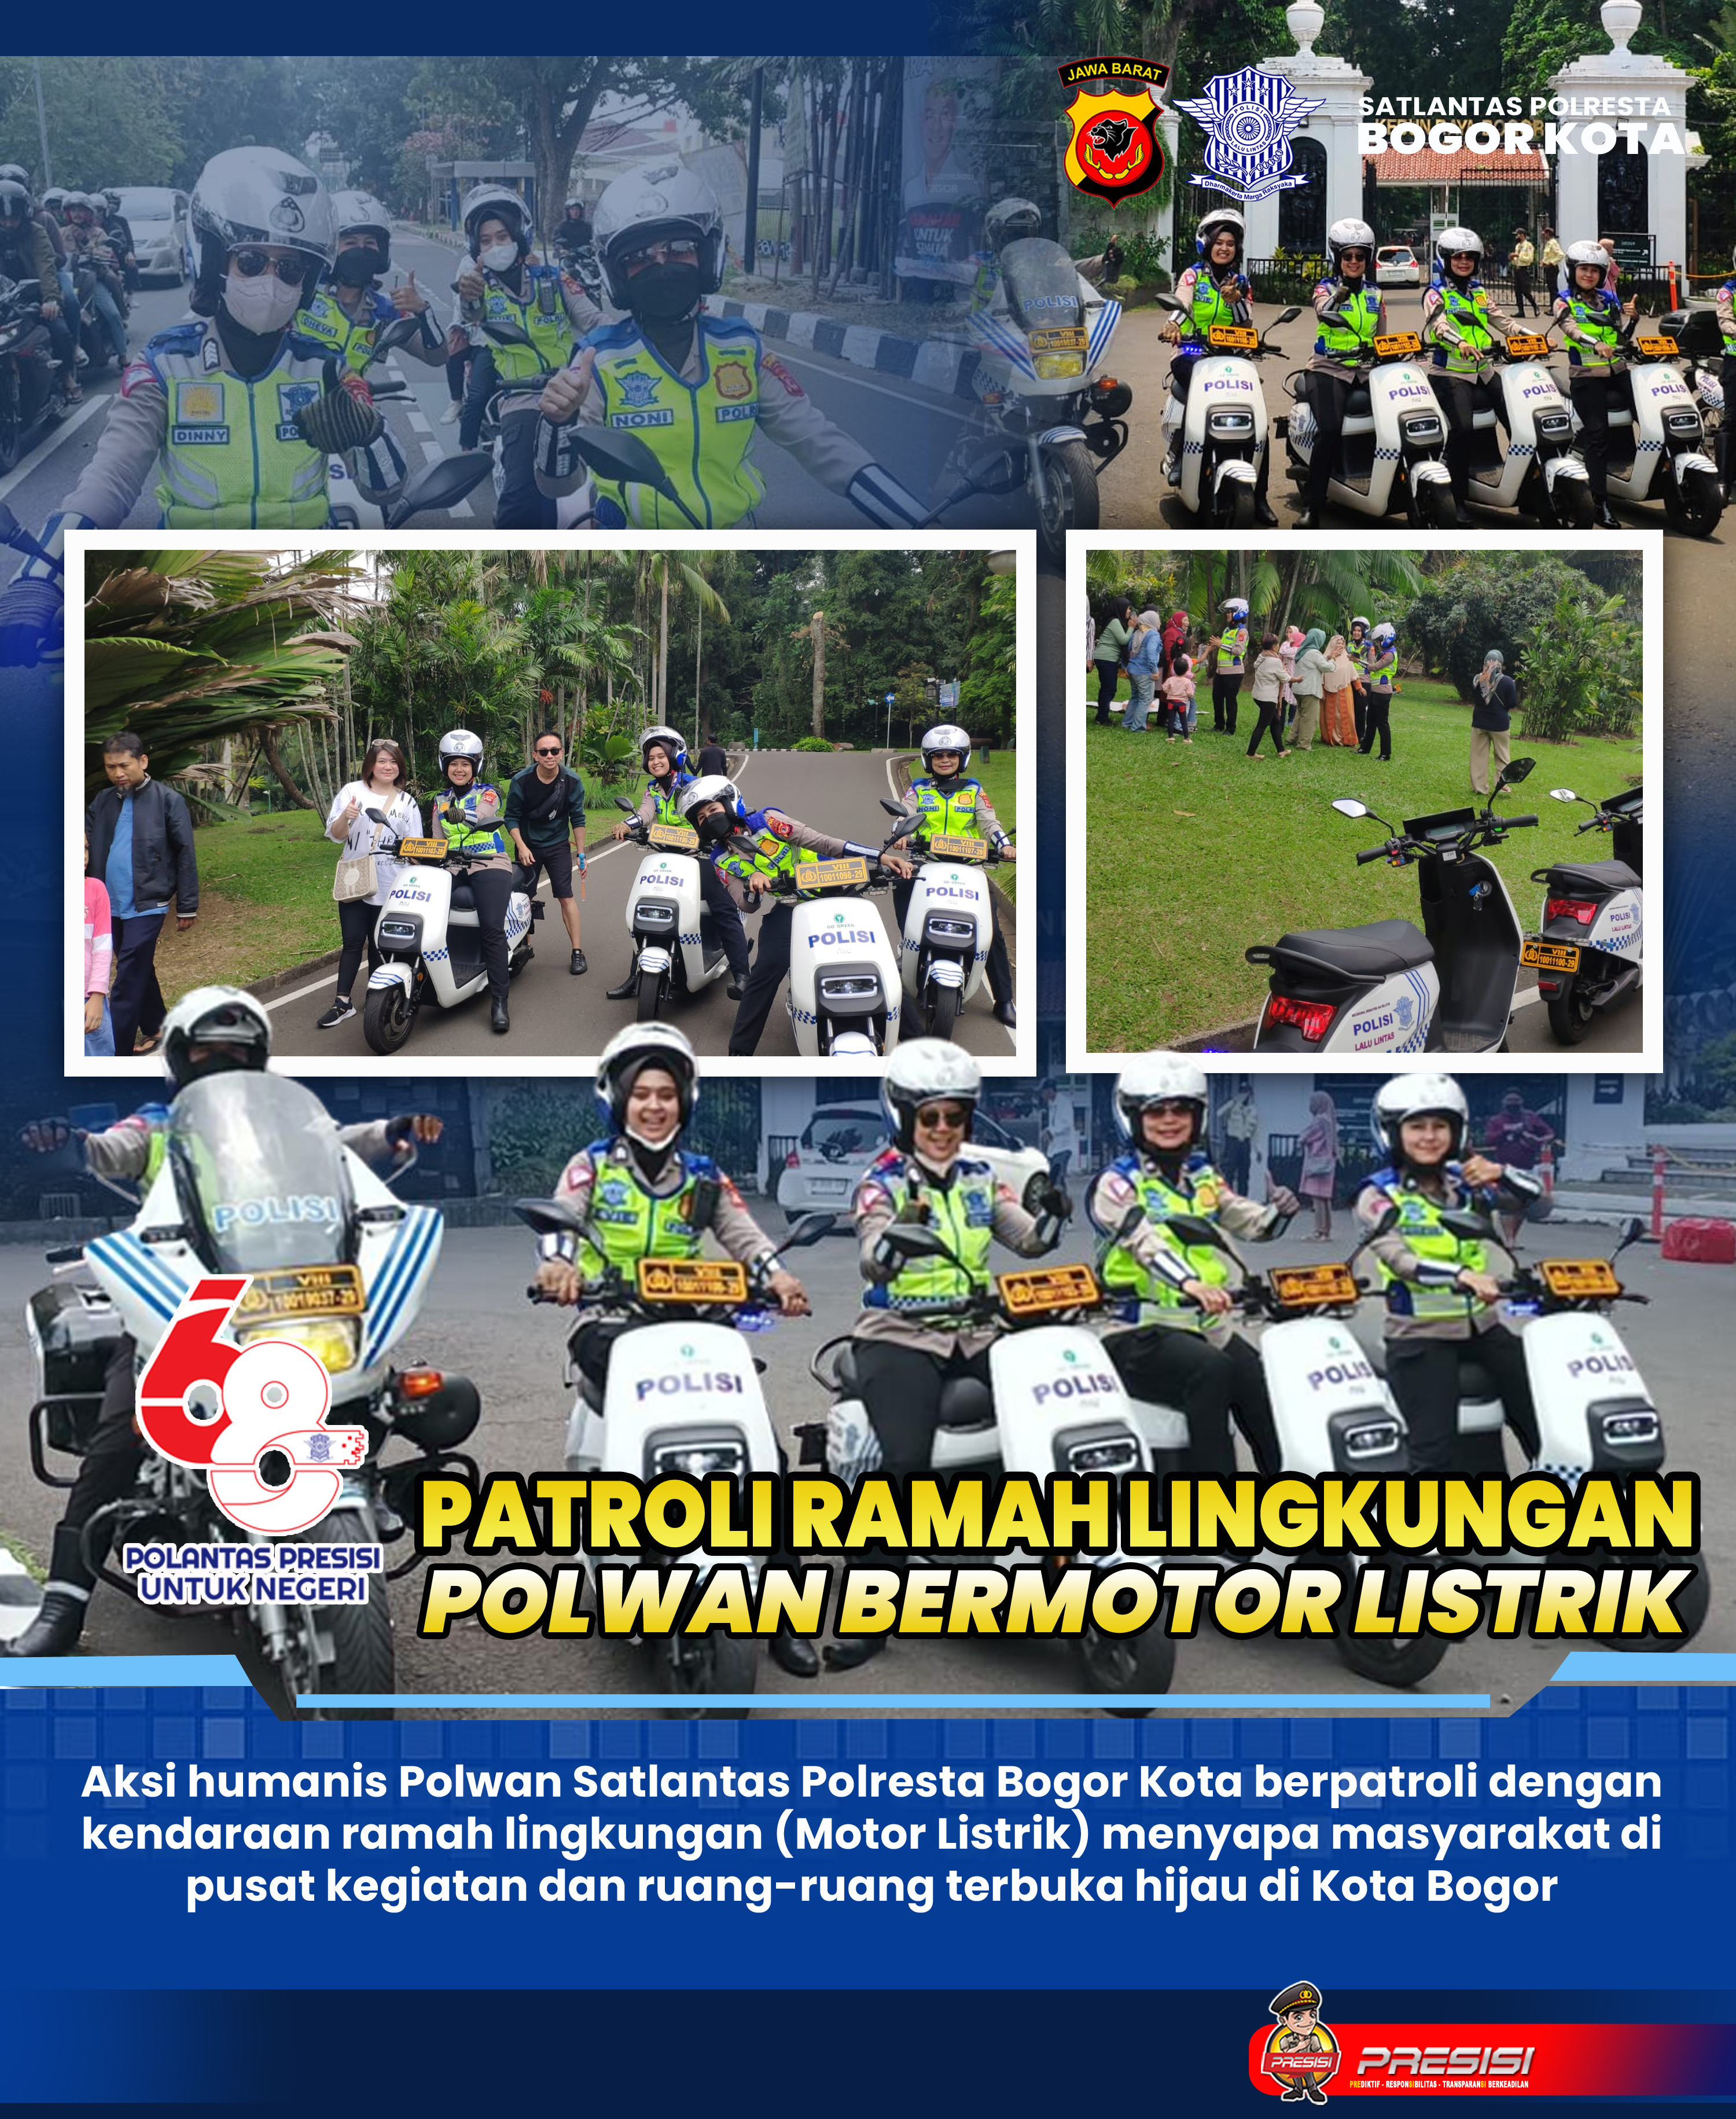 Aksi Patroli Humanis Polwan Satlantas Polresta Bogor Kota Kendarai Motor Listrik